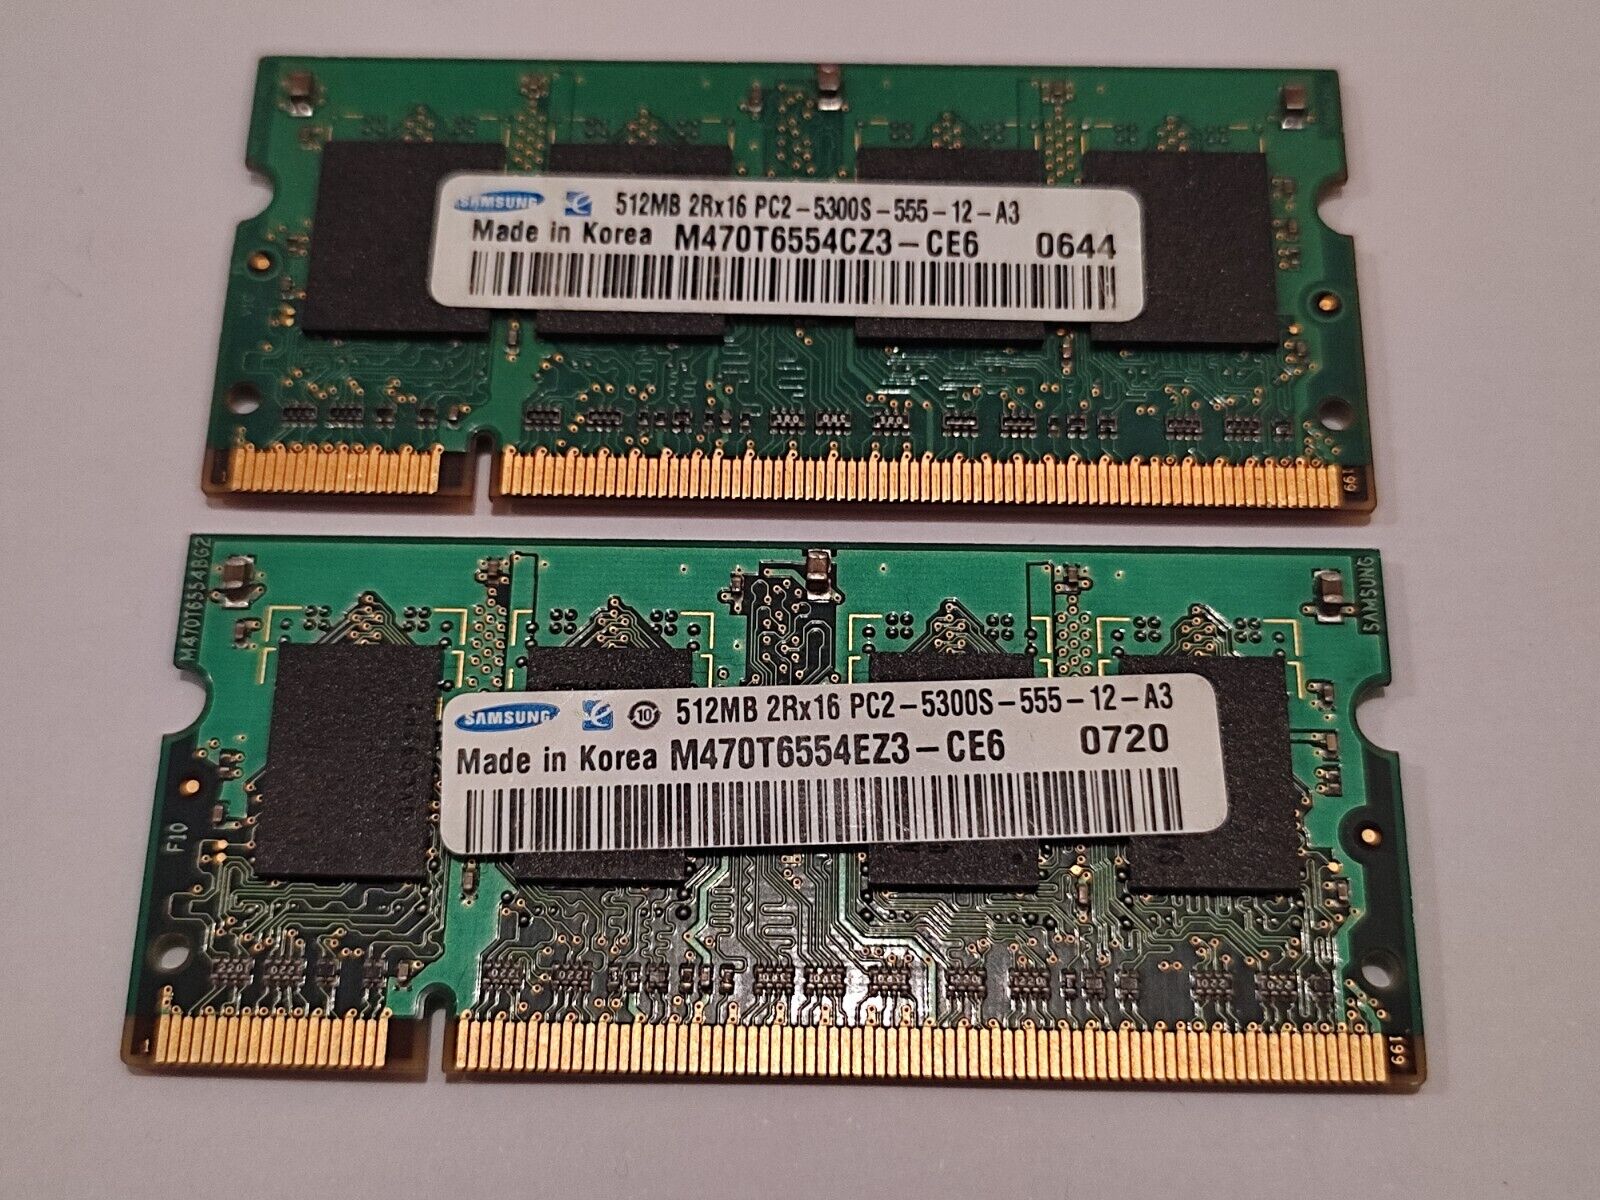 2x 512 MB Samsung PC2-5300 SODIMM DDR2 M470T6554EZ3-Ce6